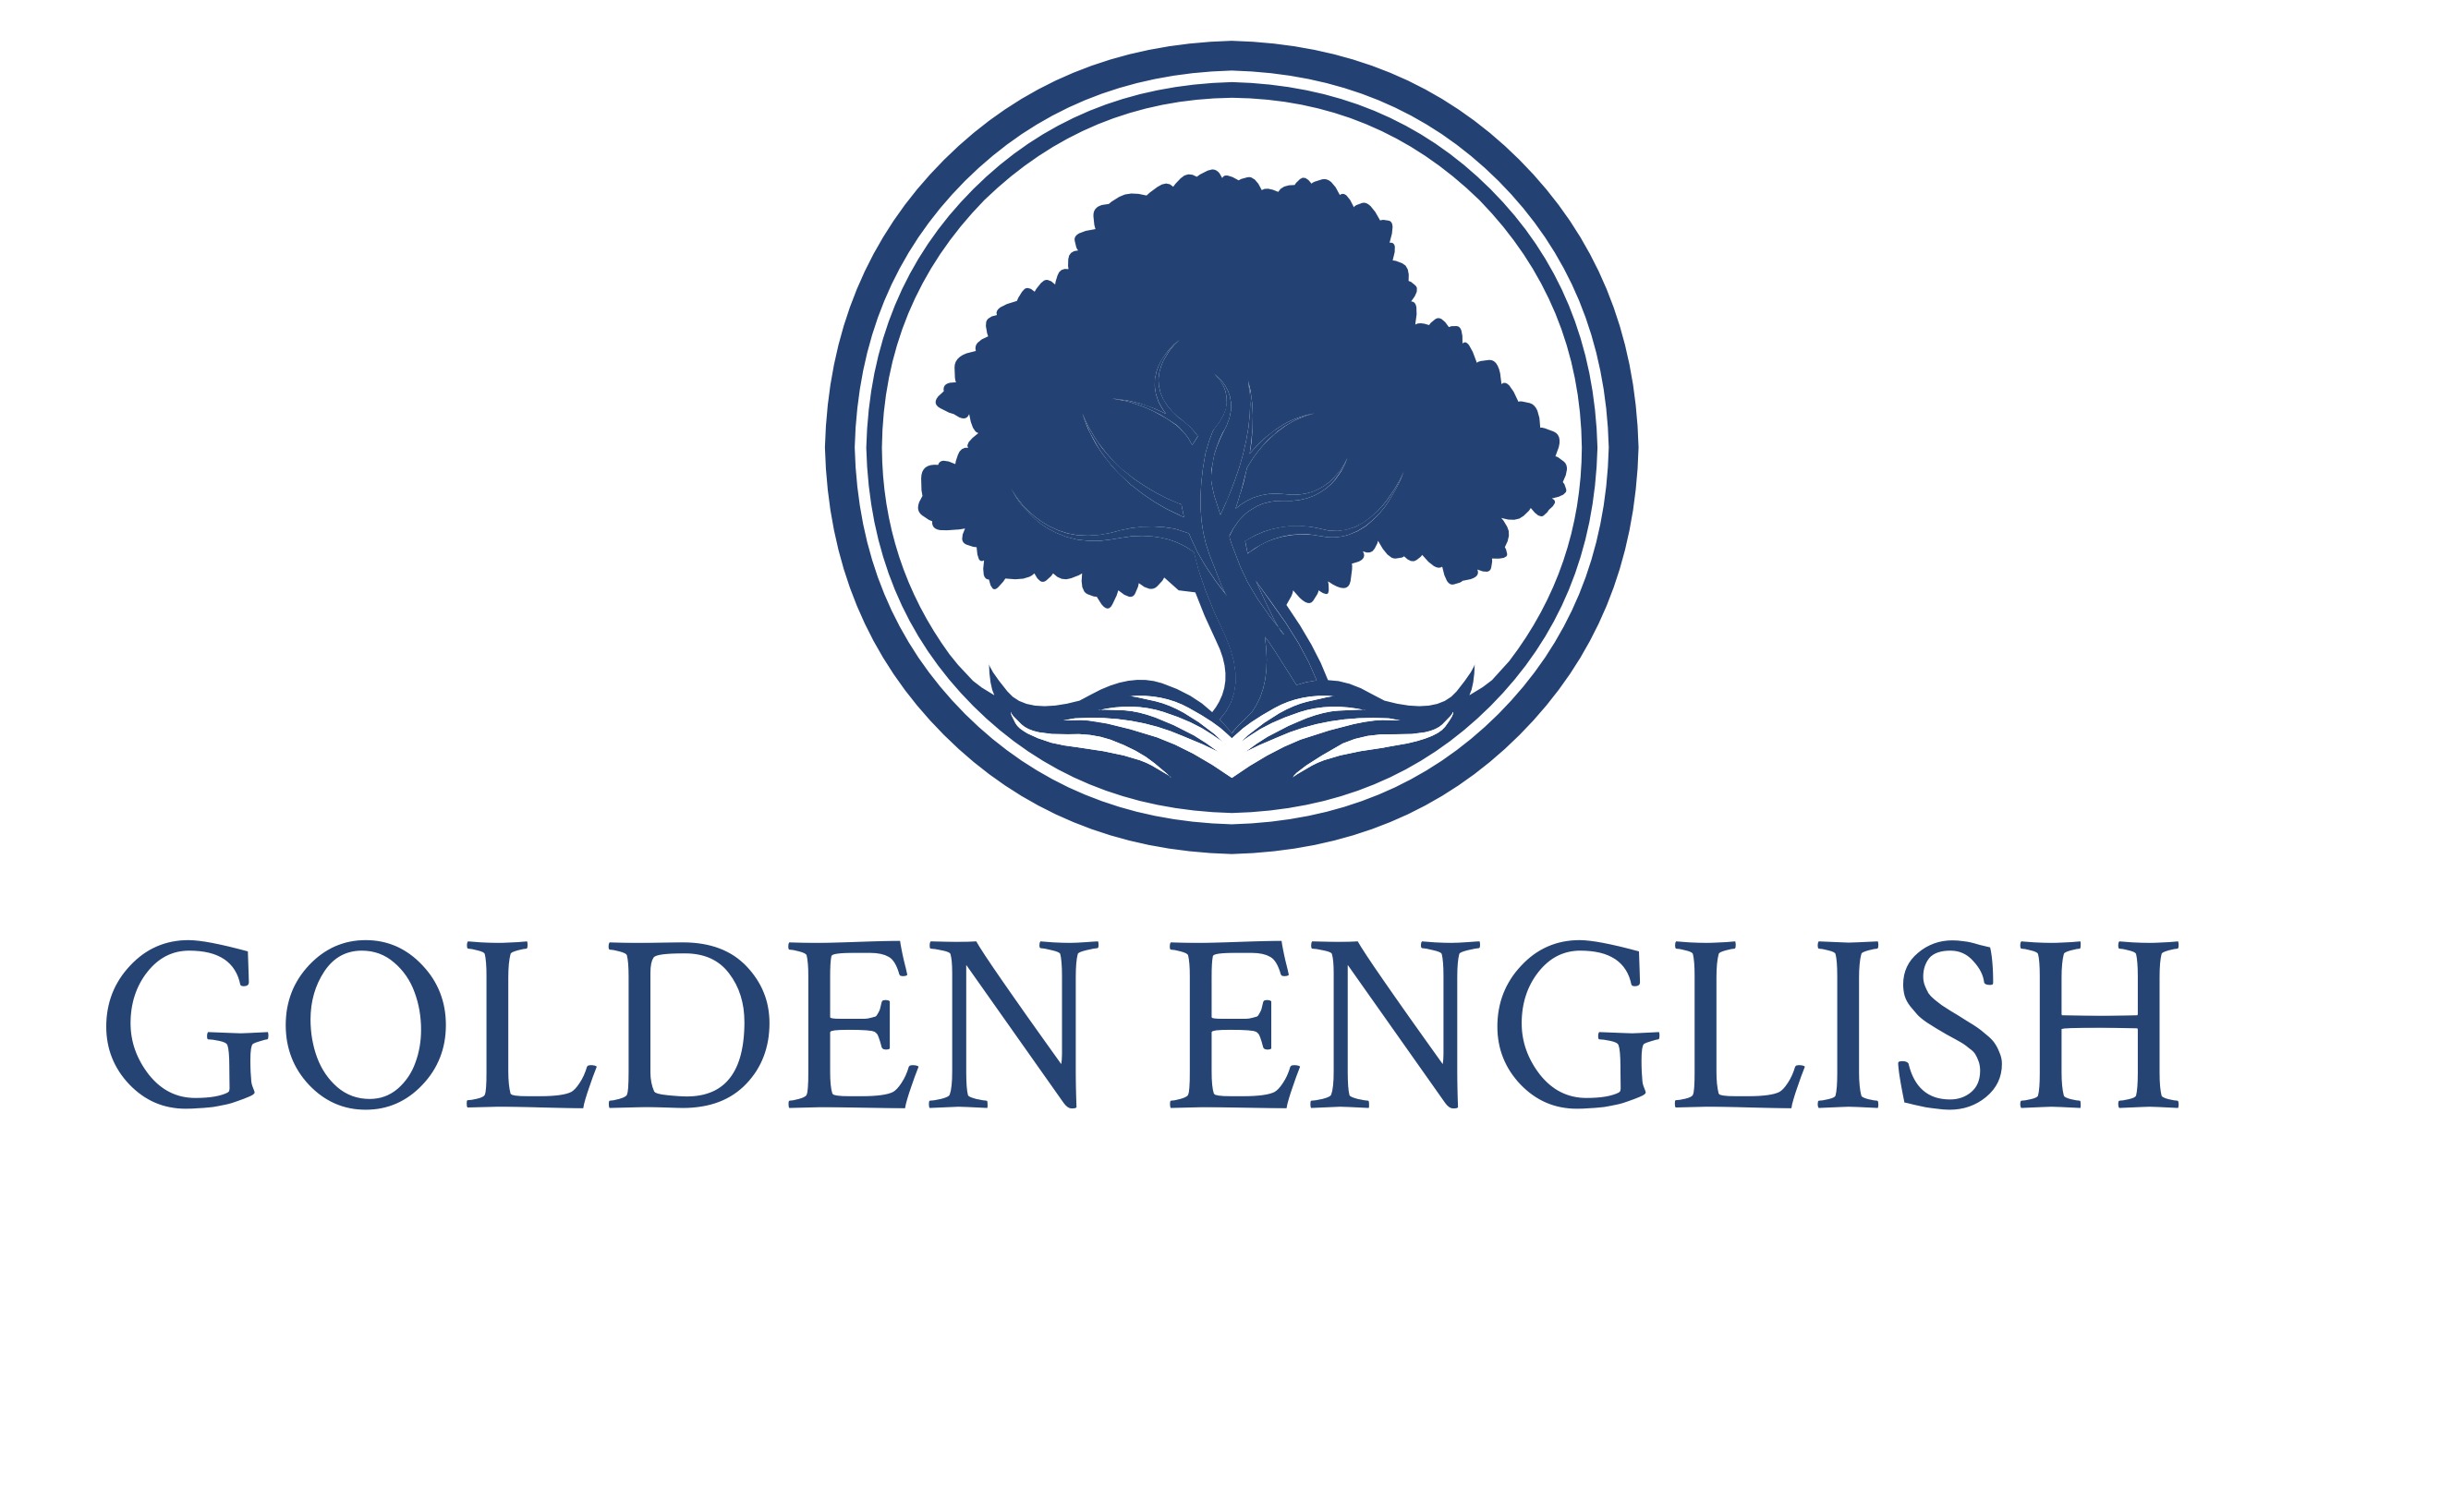 GOLDEN ENGLISH